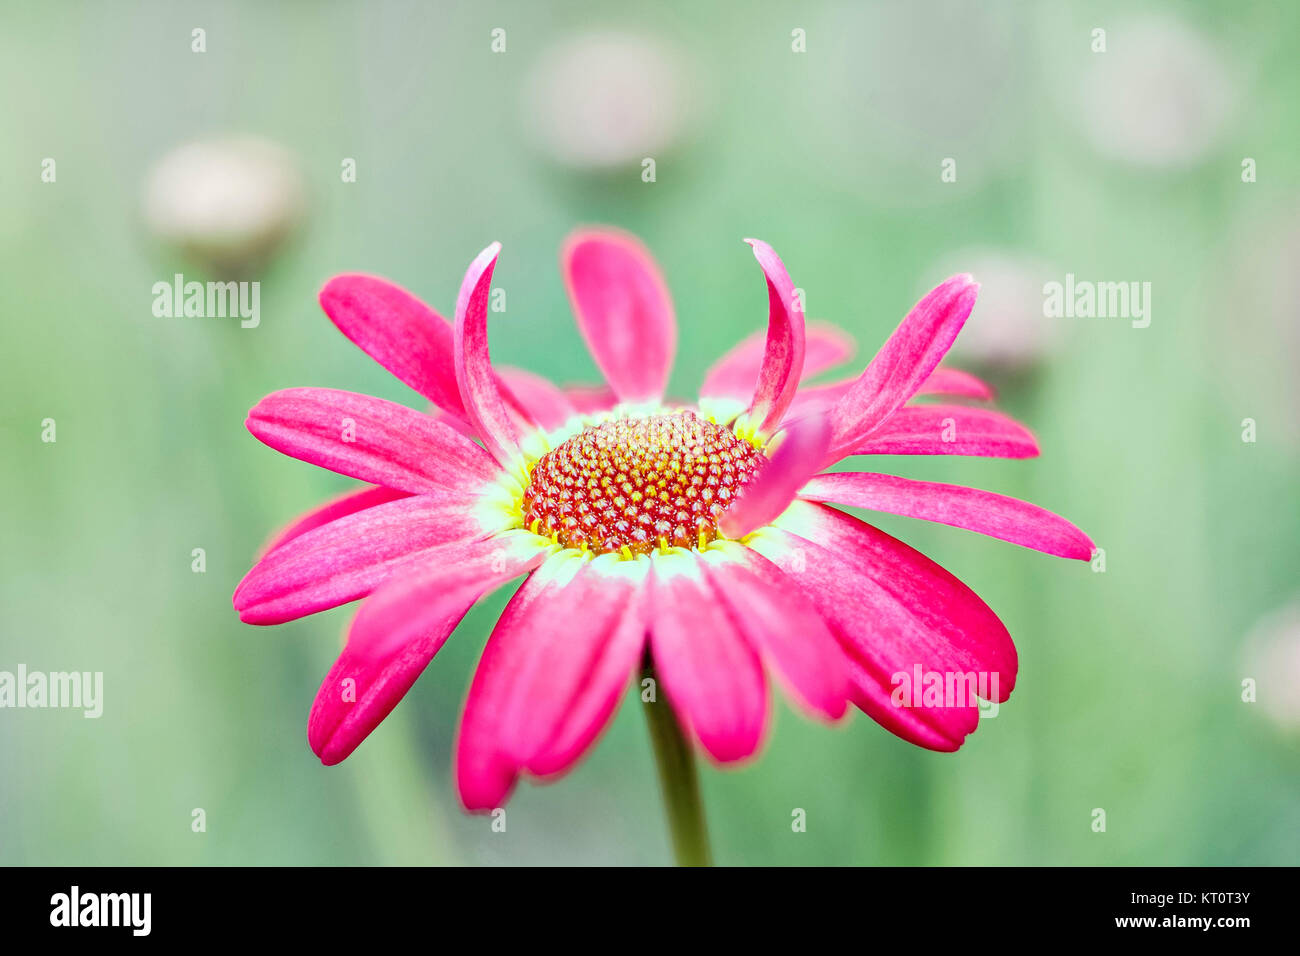 Rosa Marguerite Daisy  Argyranthemum frutescens Molimba 'Watermelon' Stockfoto